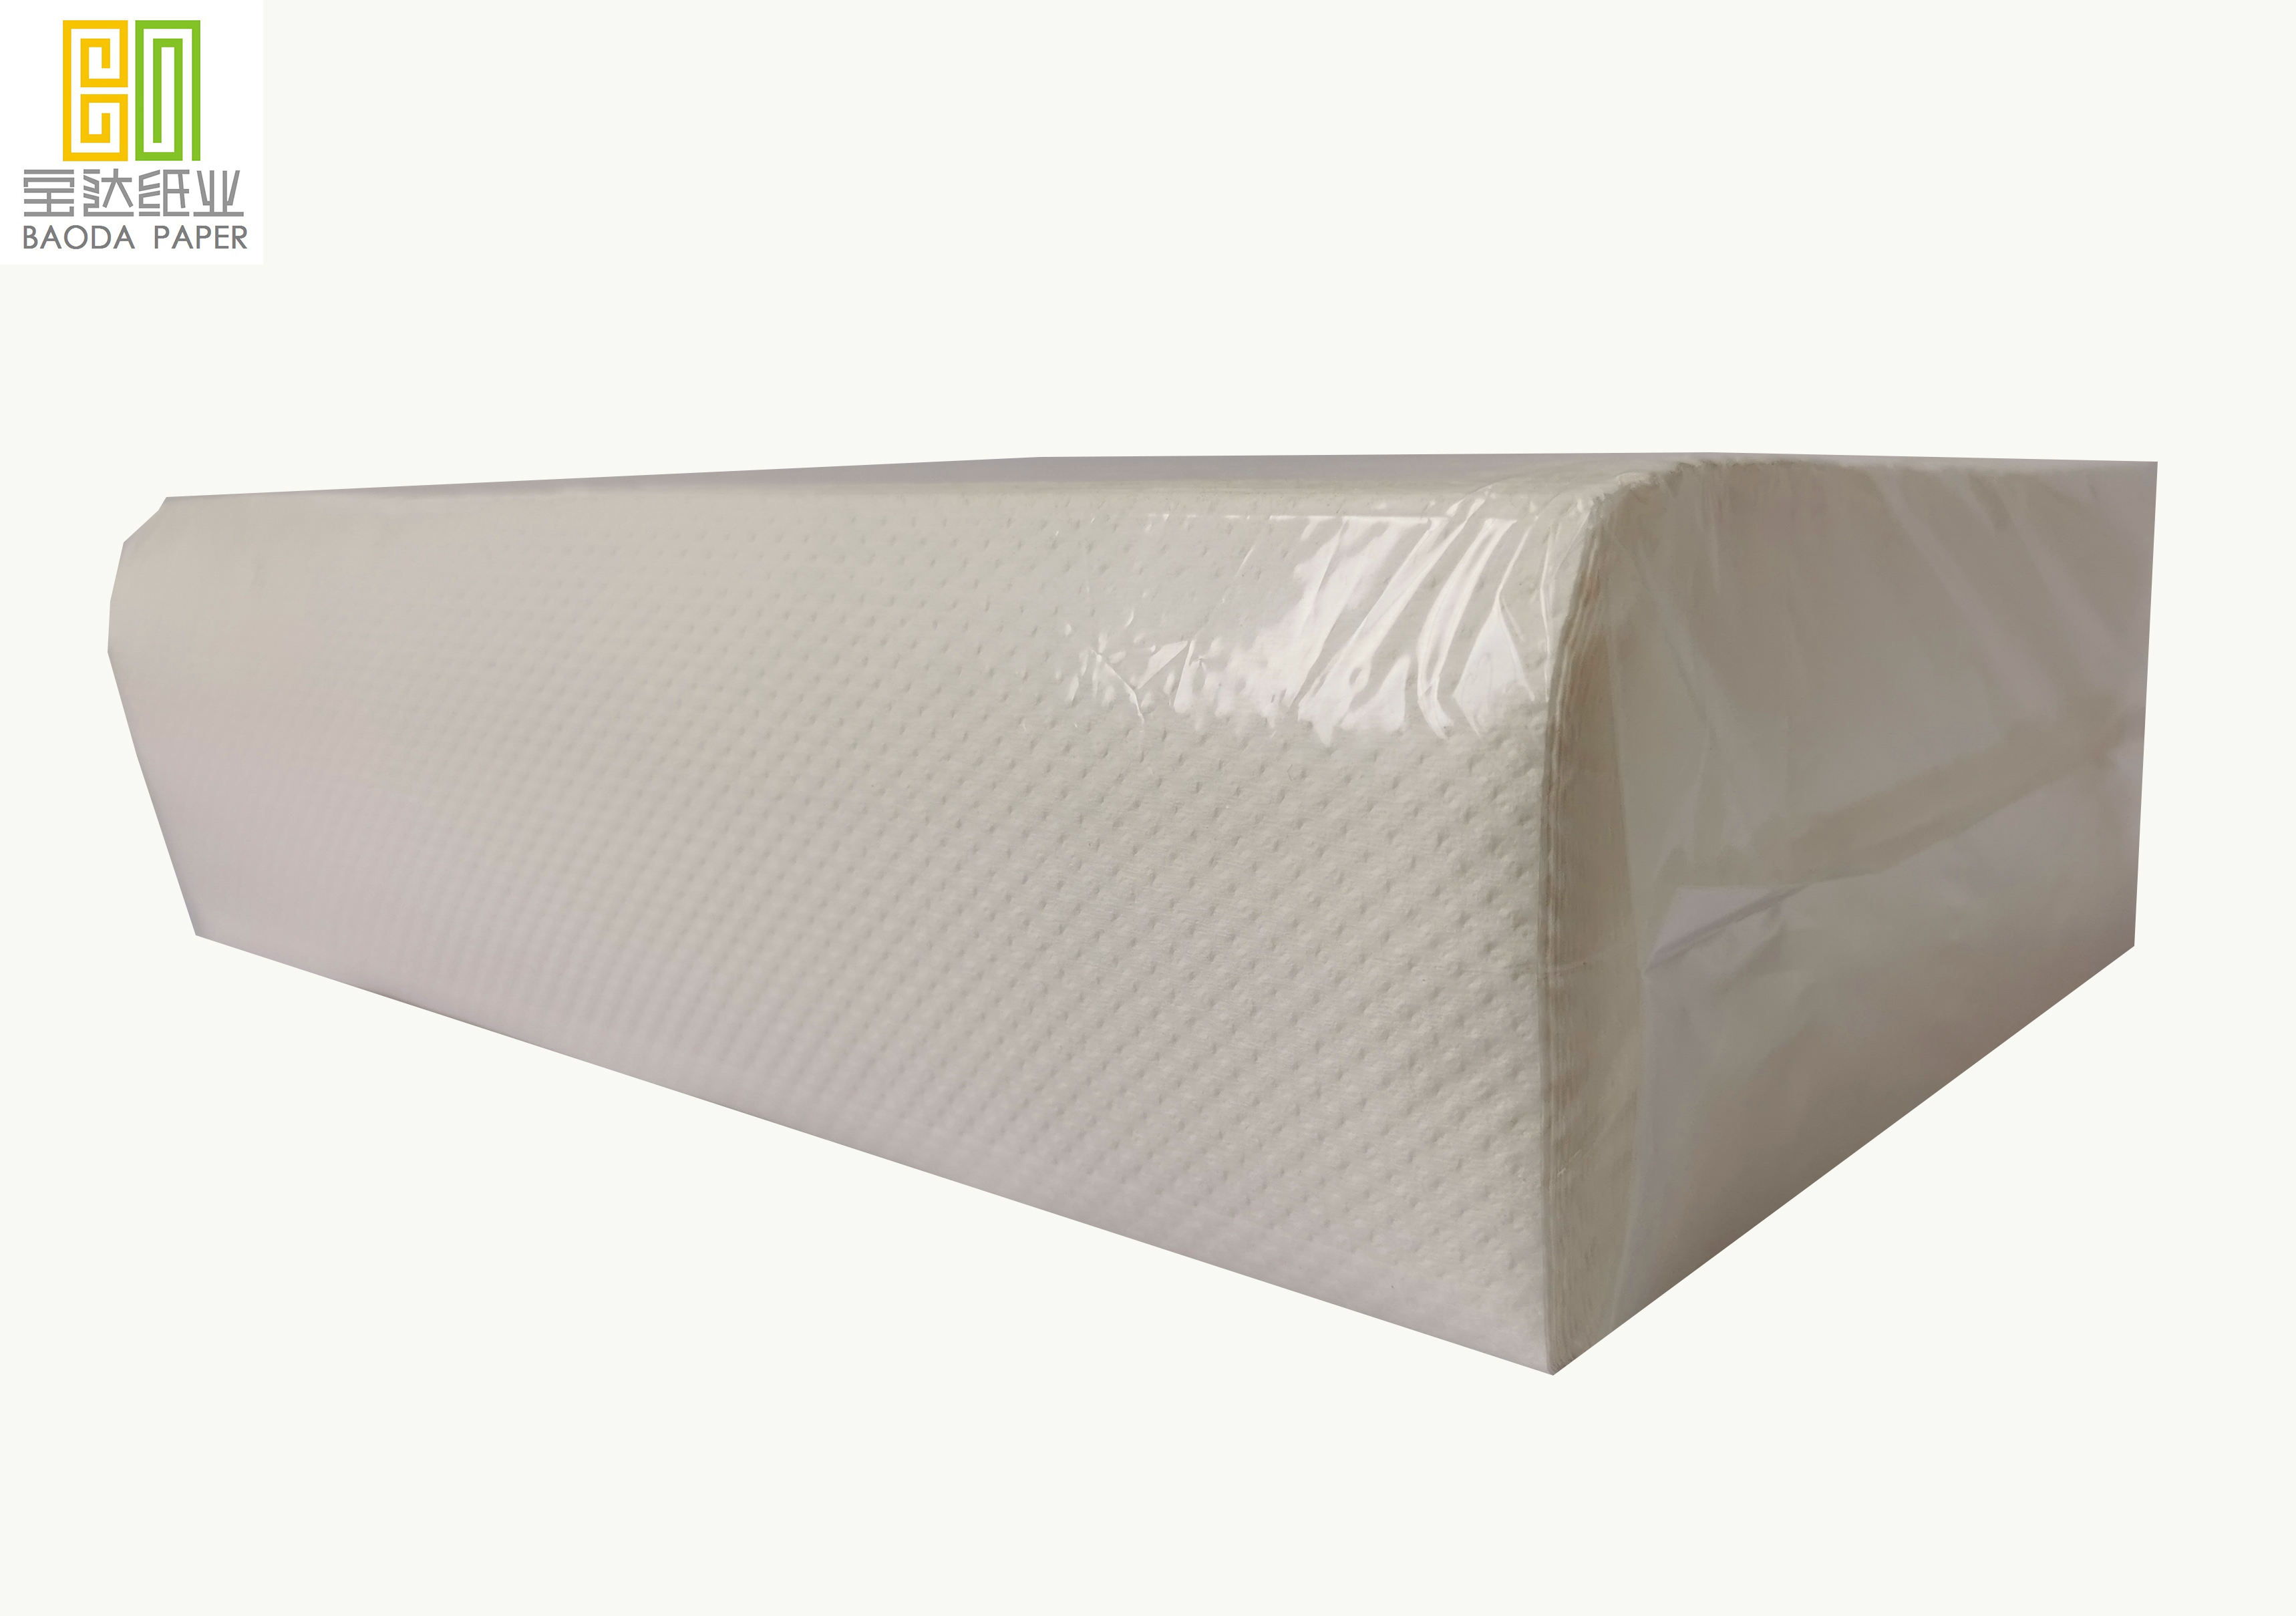 Wholesale Professional Modern Design paper napkin for restaurant customised wedding serviettes folded napkins